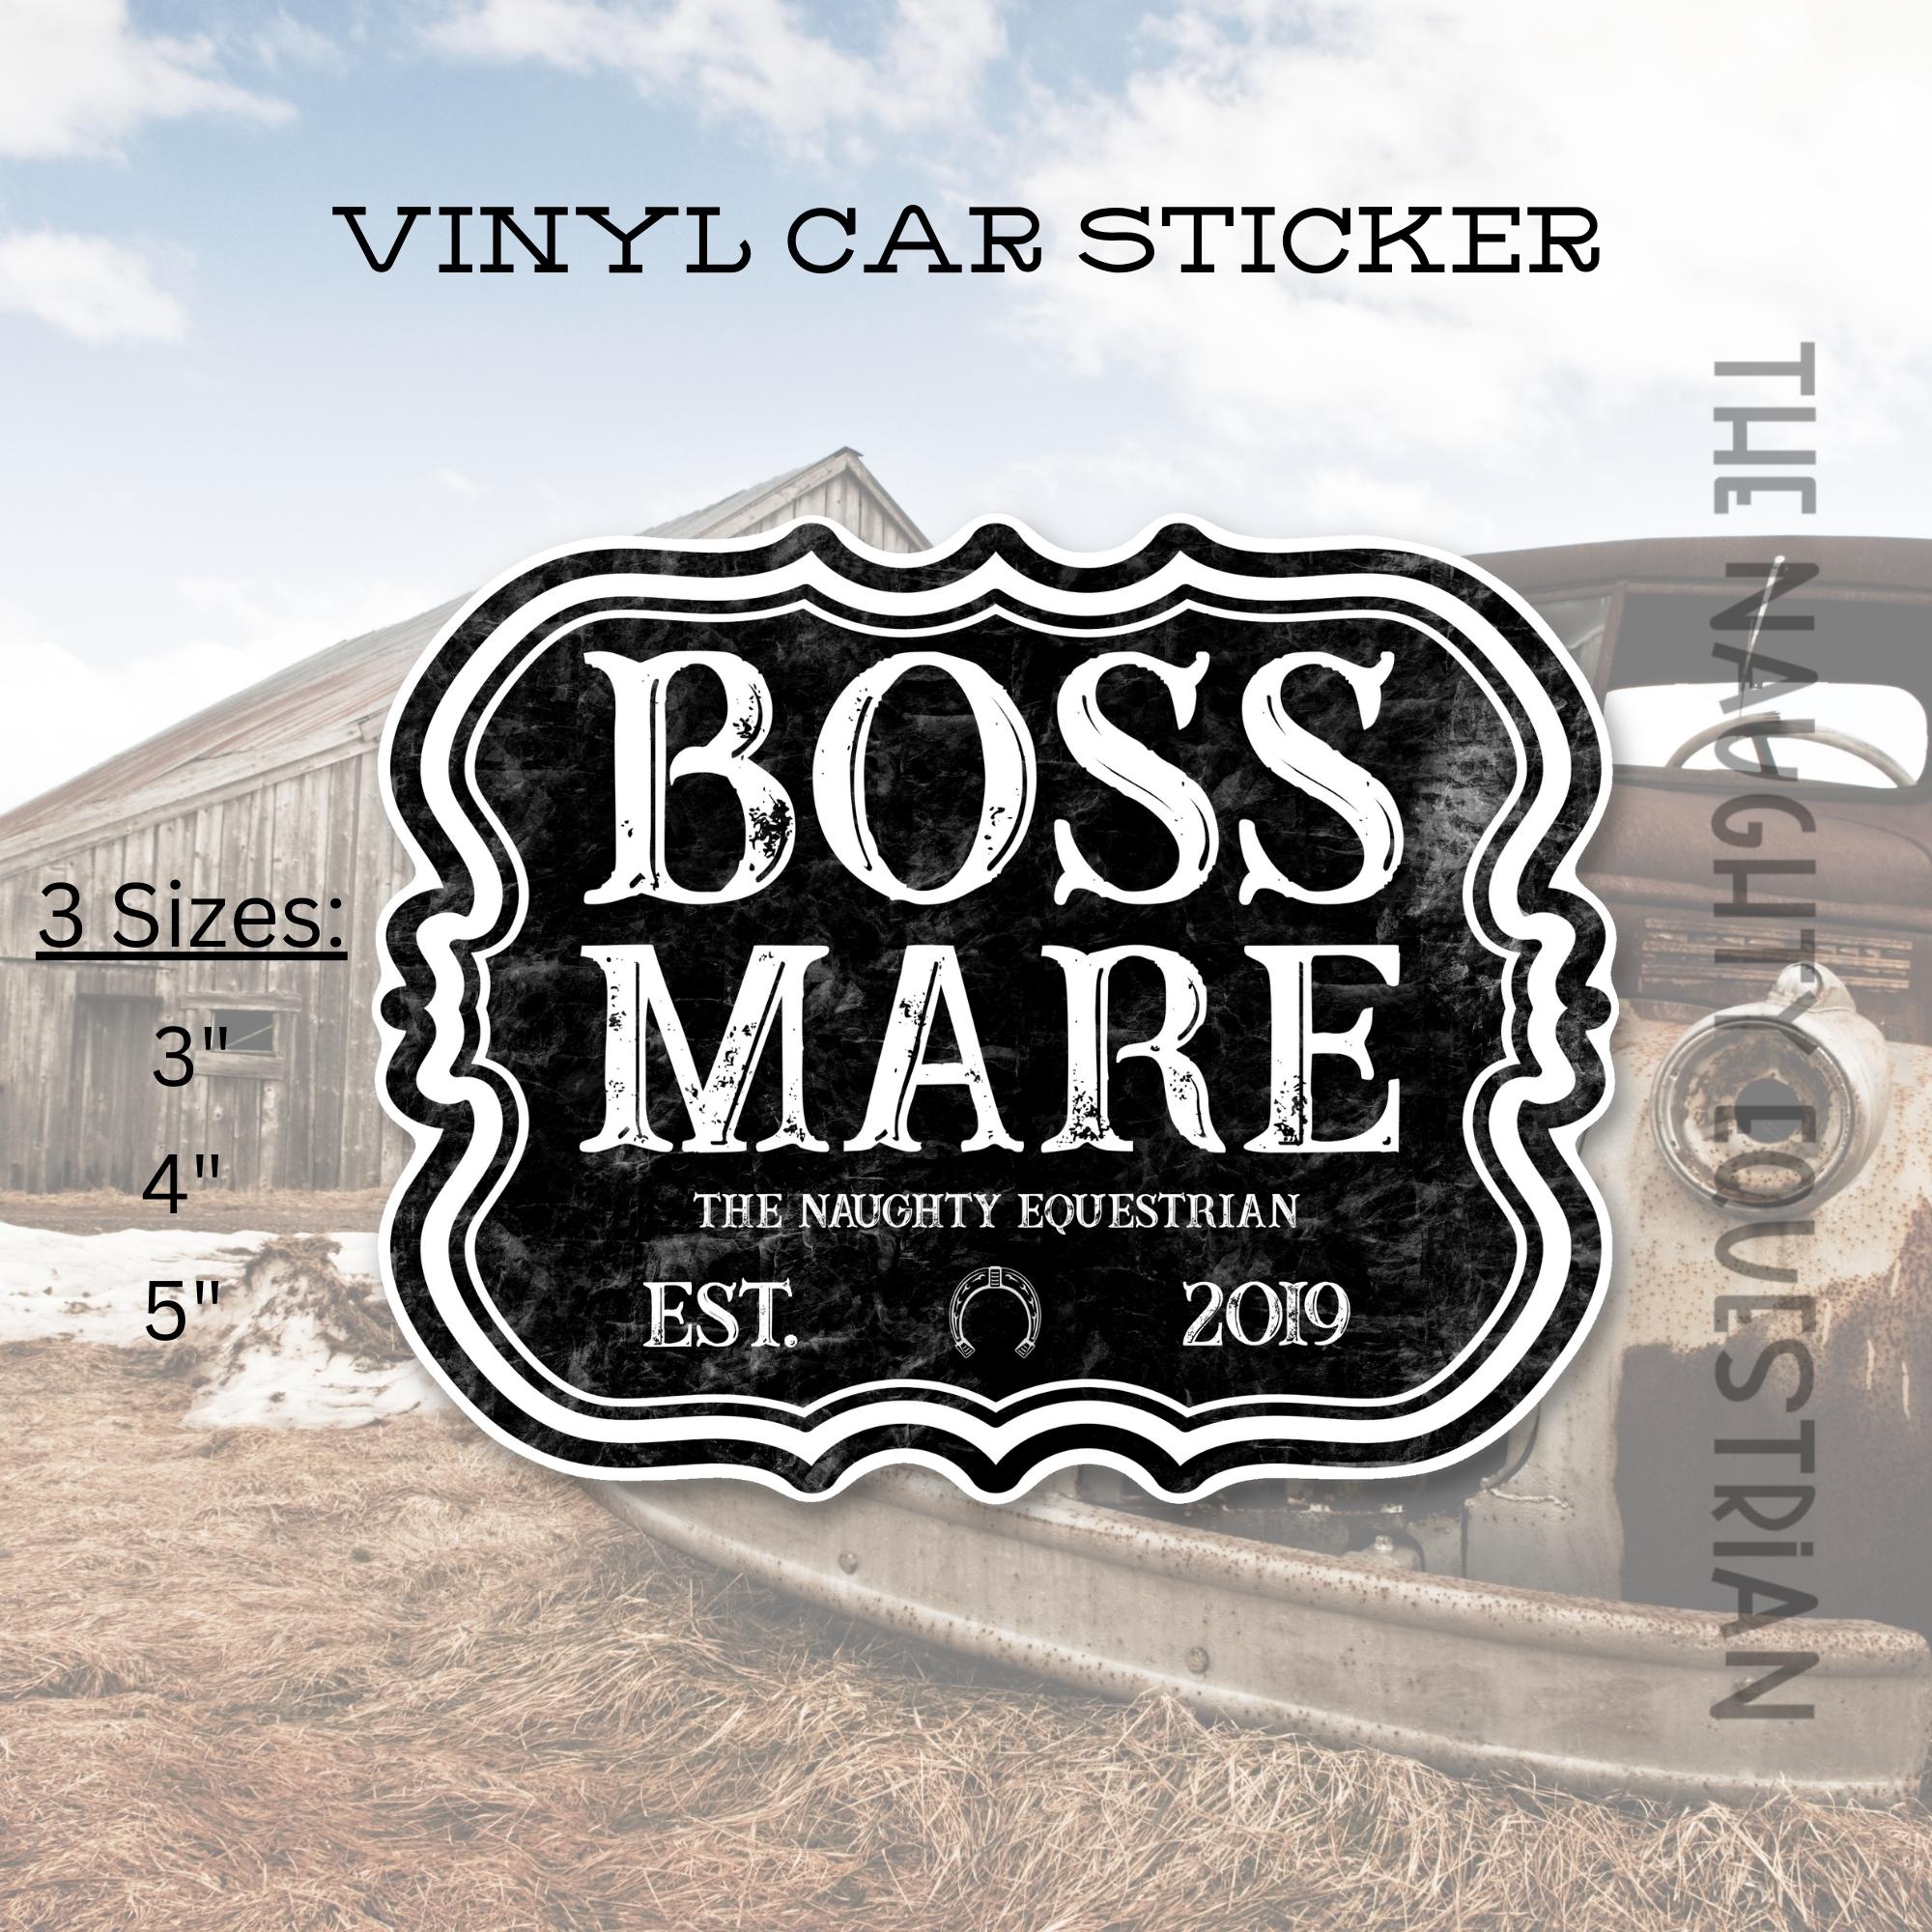 Boss Mare Sticker, Vinyl Car Decal